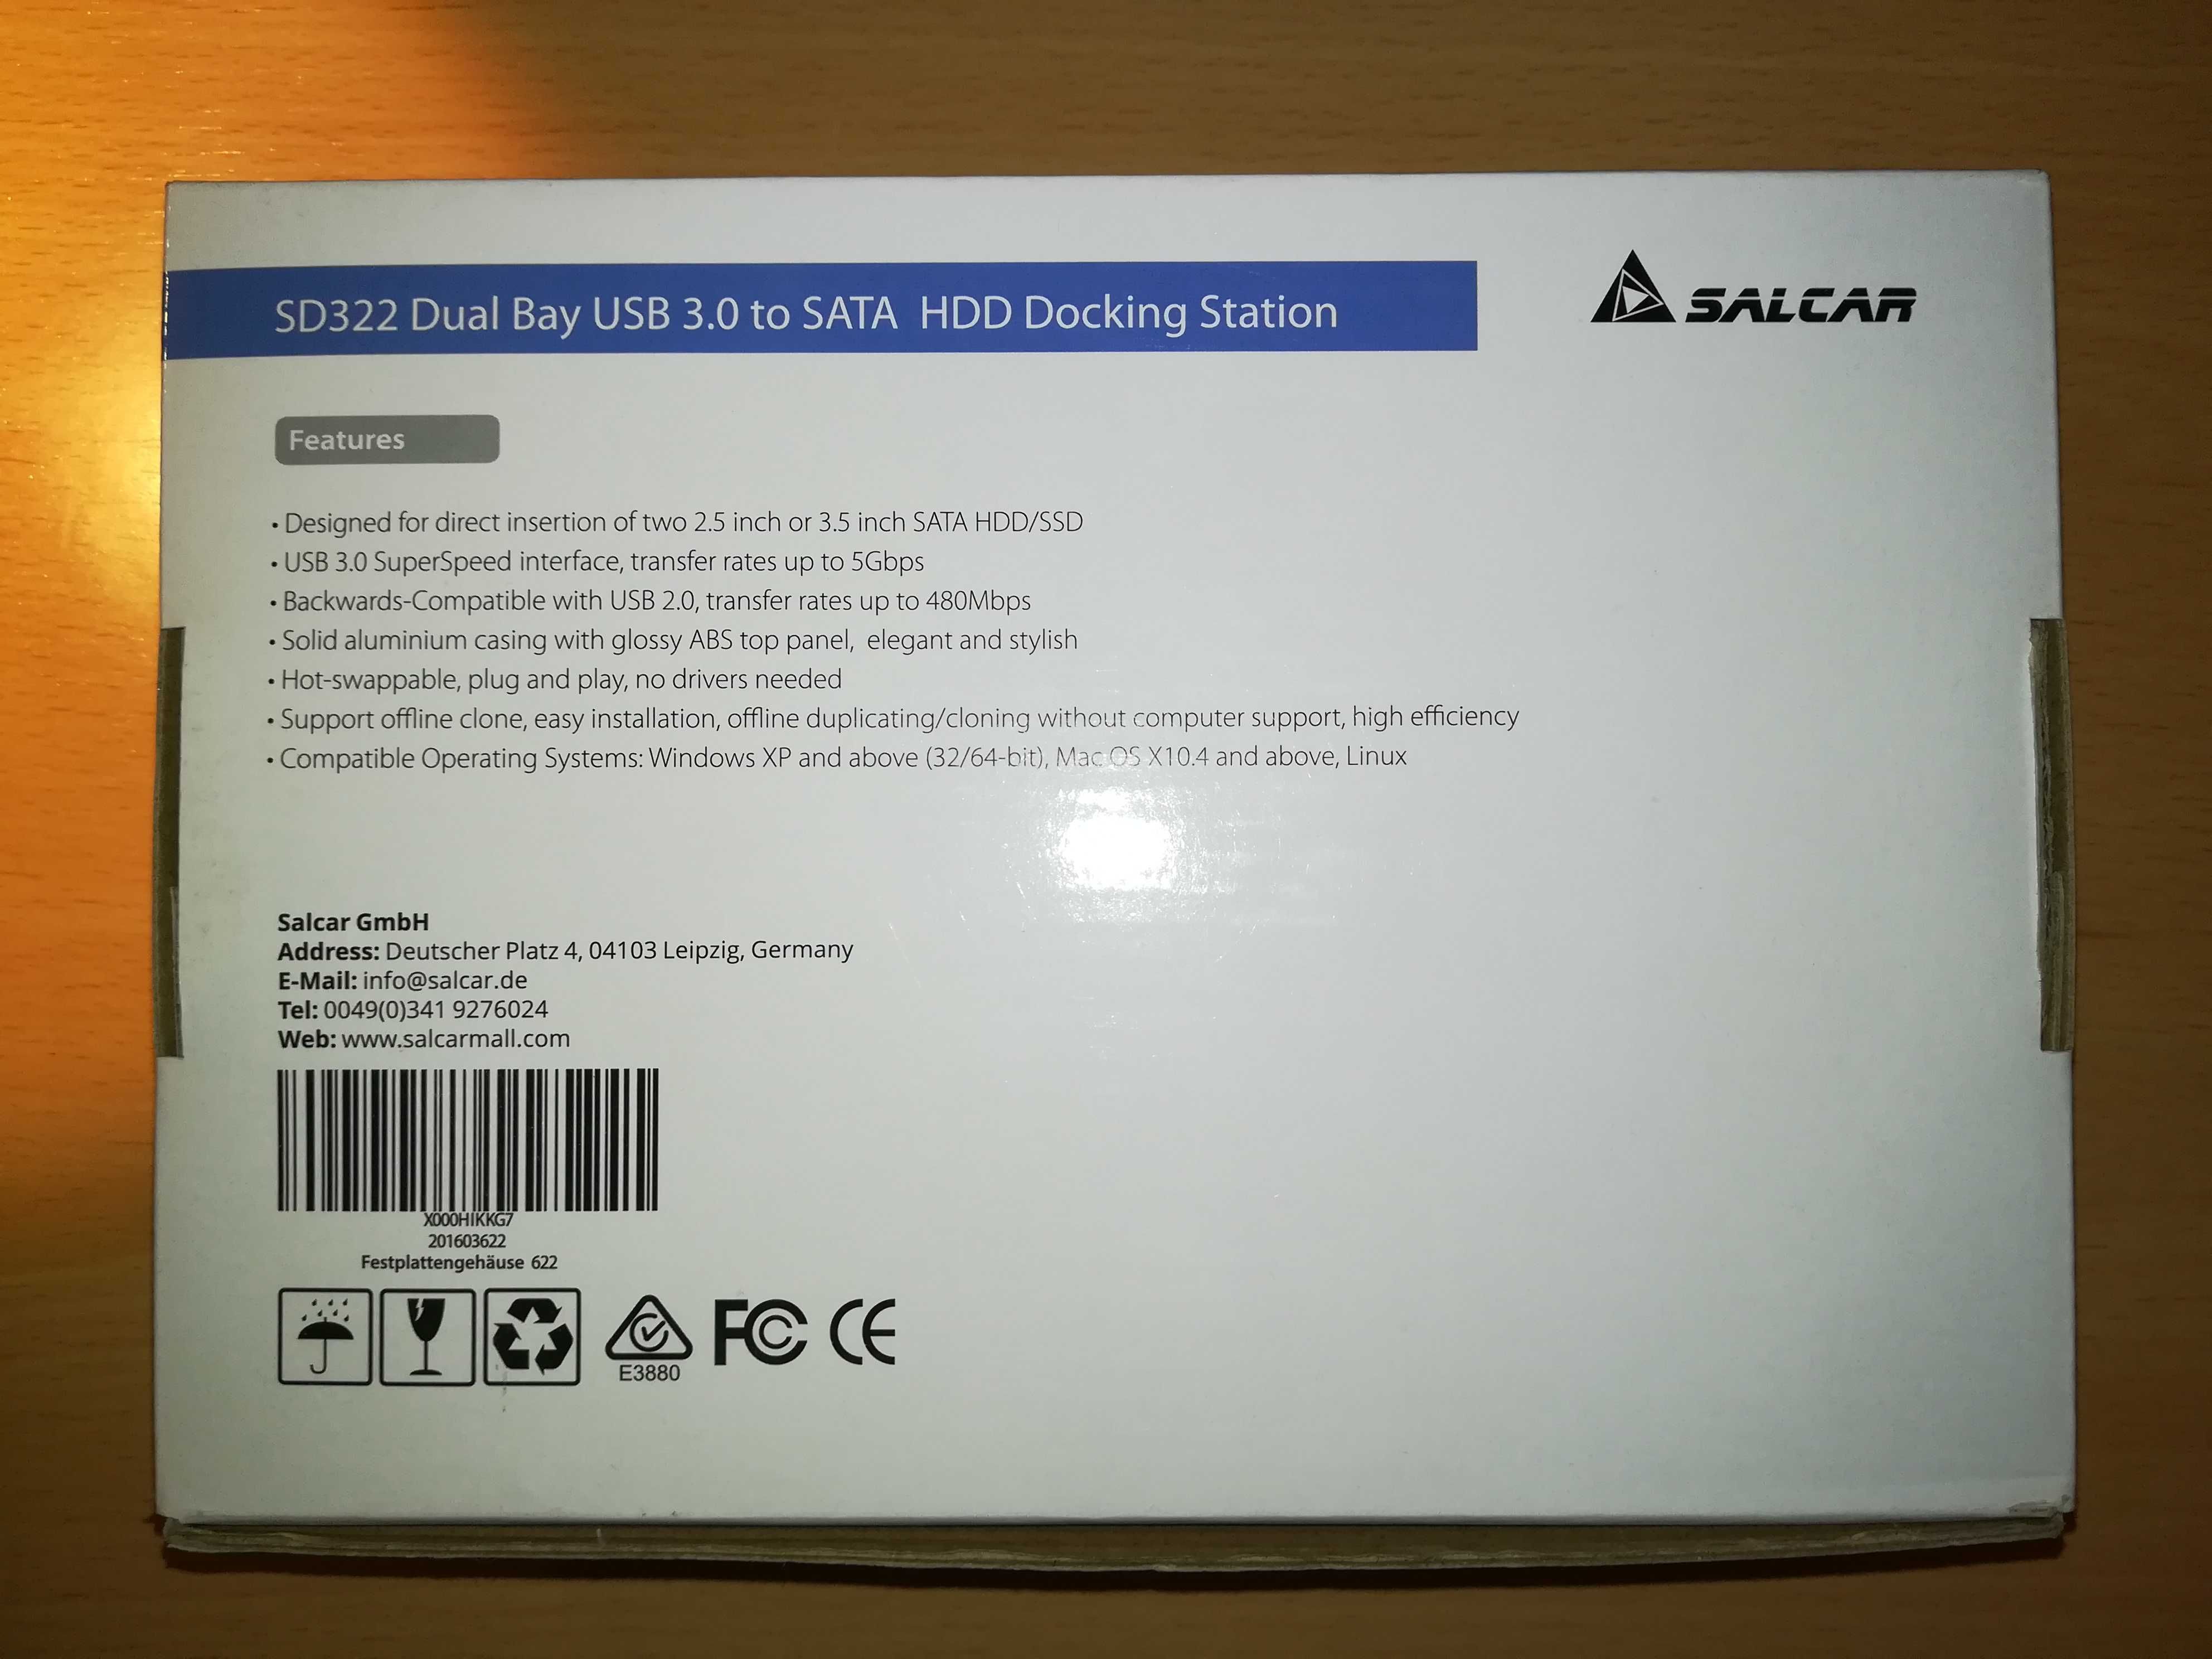 dock DUPLA - USB 3.0 - faz CLONE e RAID - SATA